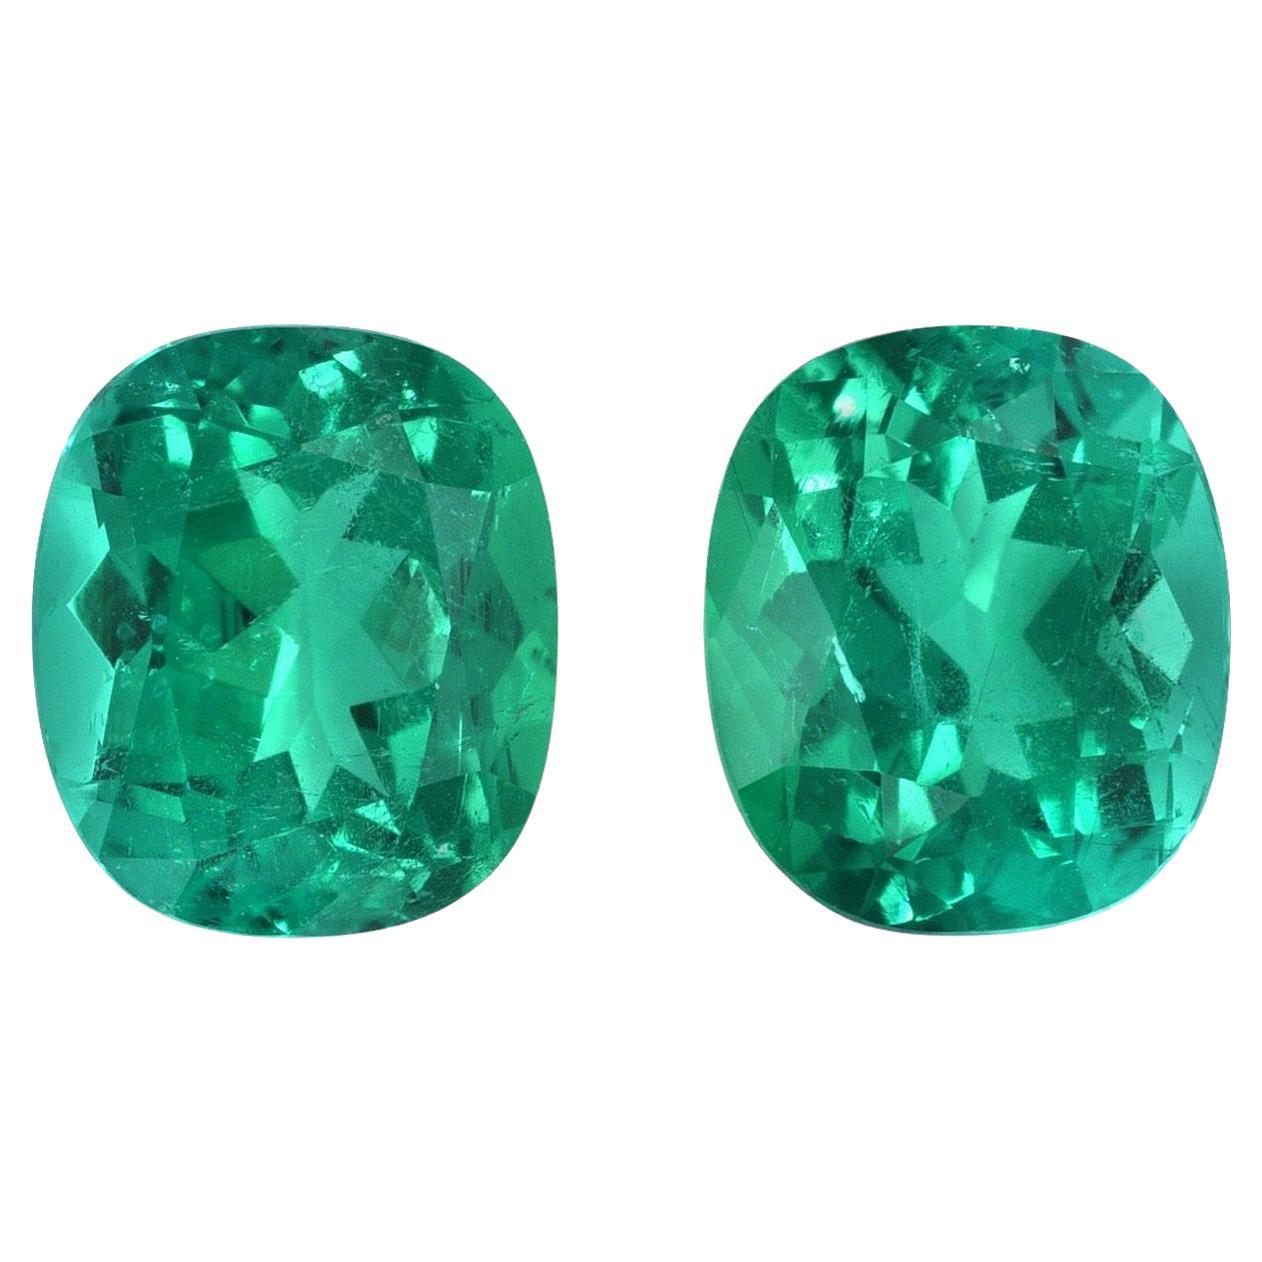 Cushion Cut Colombian Emerald Gemstone Pair 3.11 Carats Cushion Loose Gems